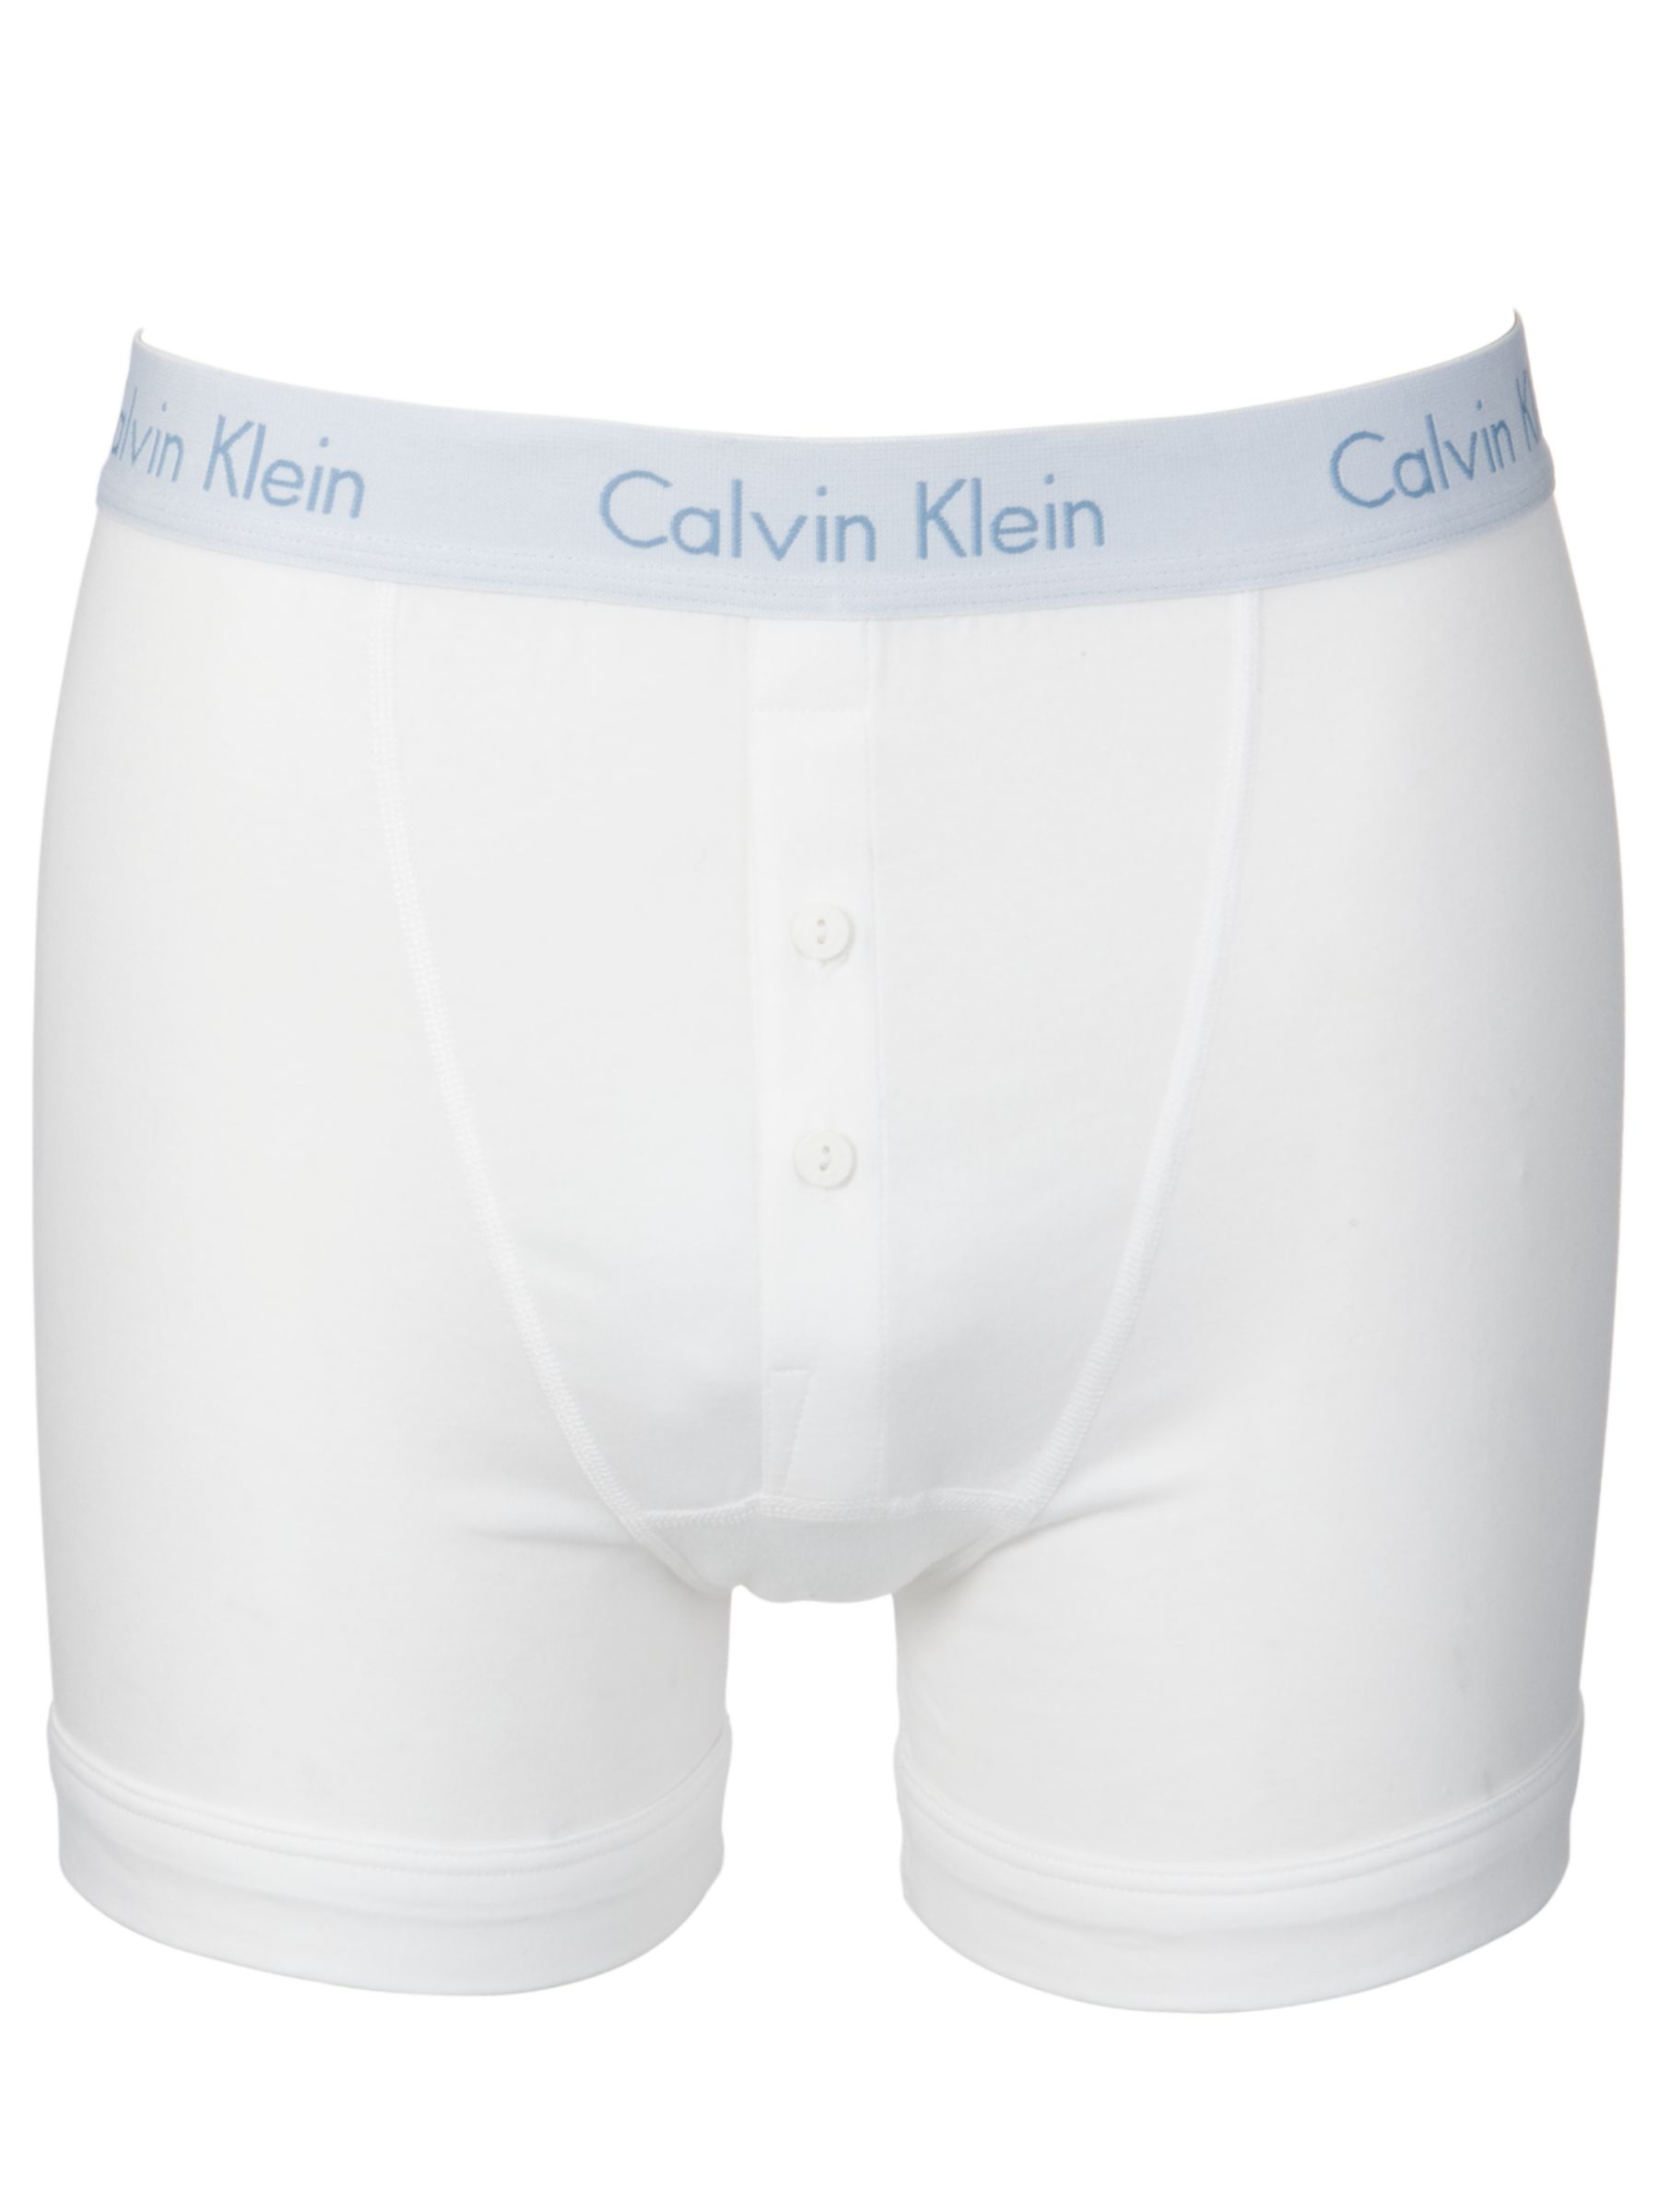 Calvin Klein Flexible Fit Cotton Trunks, White, Medium